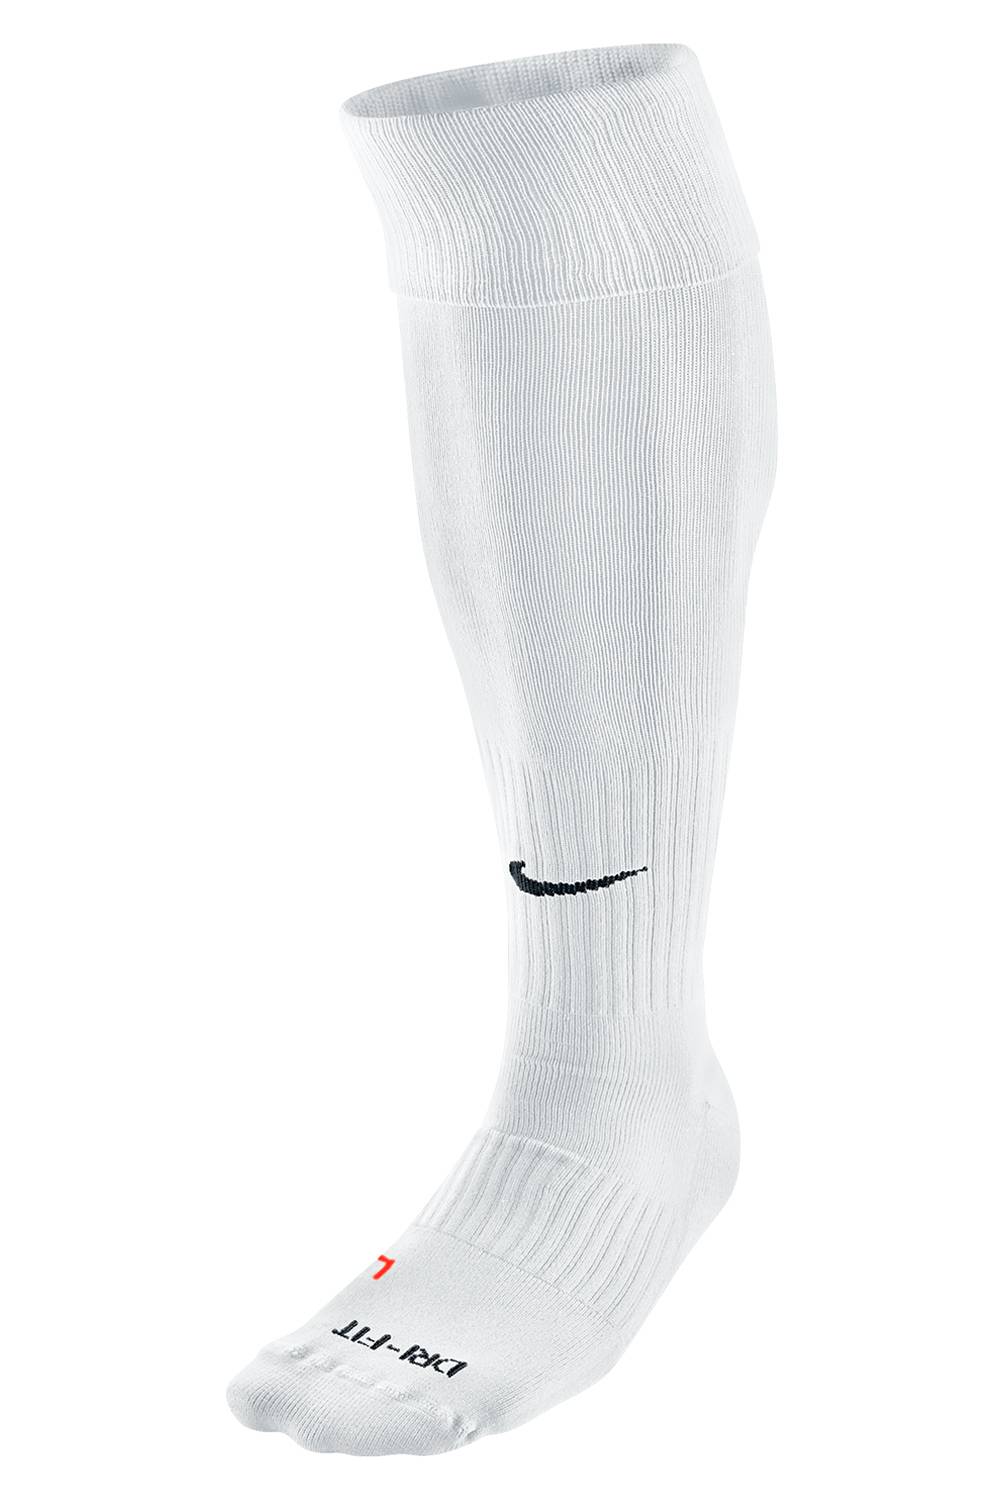 NIKE - Calcetines Deportivos Hombre Nike